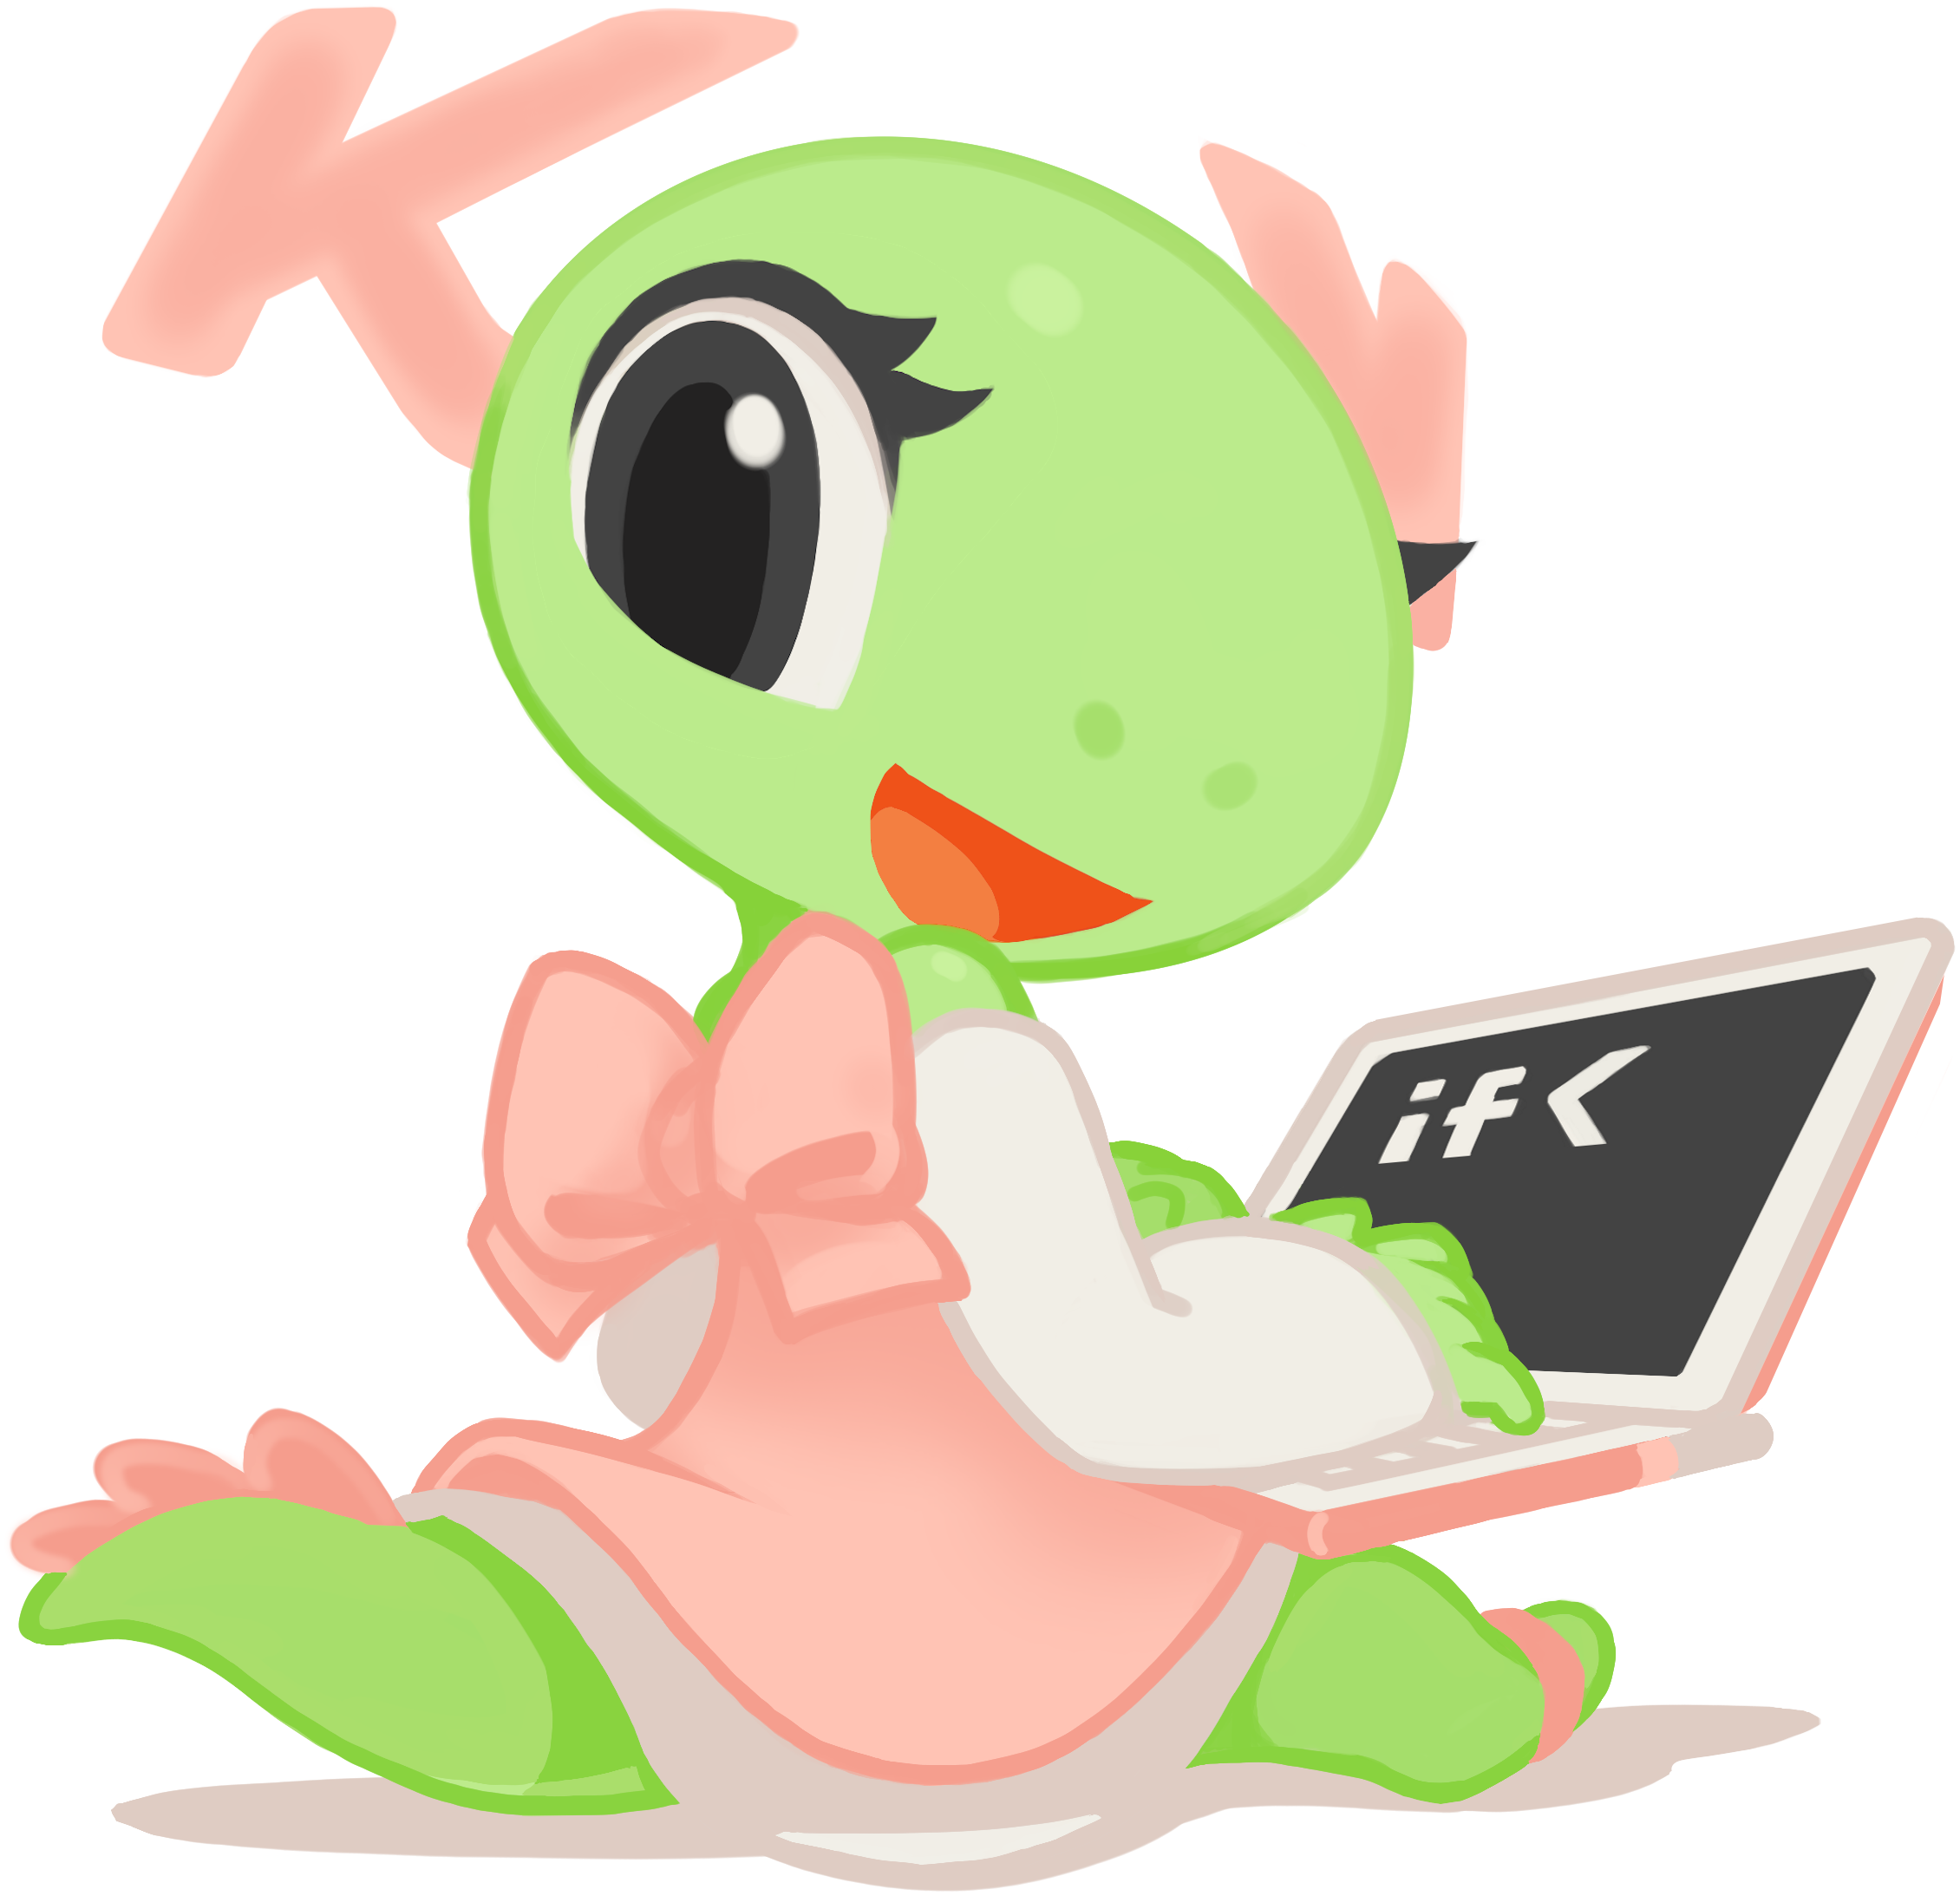 Katie, KDE's friendly dragon, develops apps for SoK